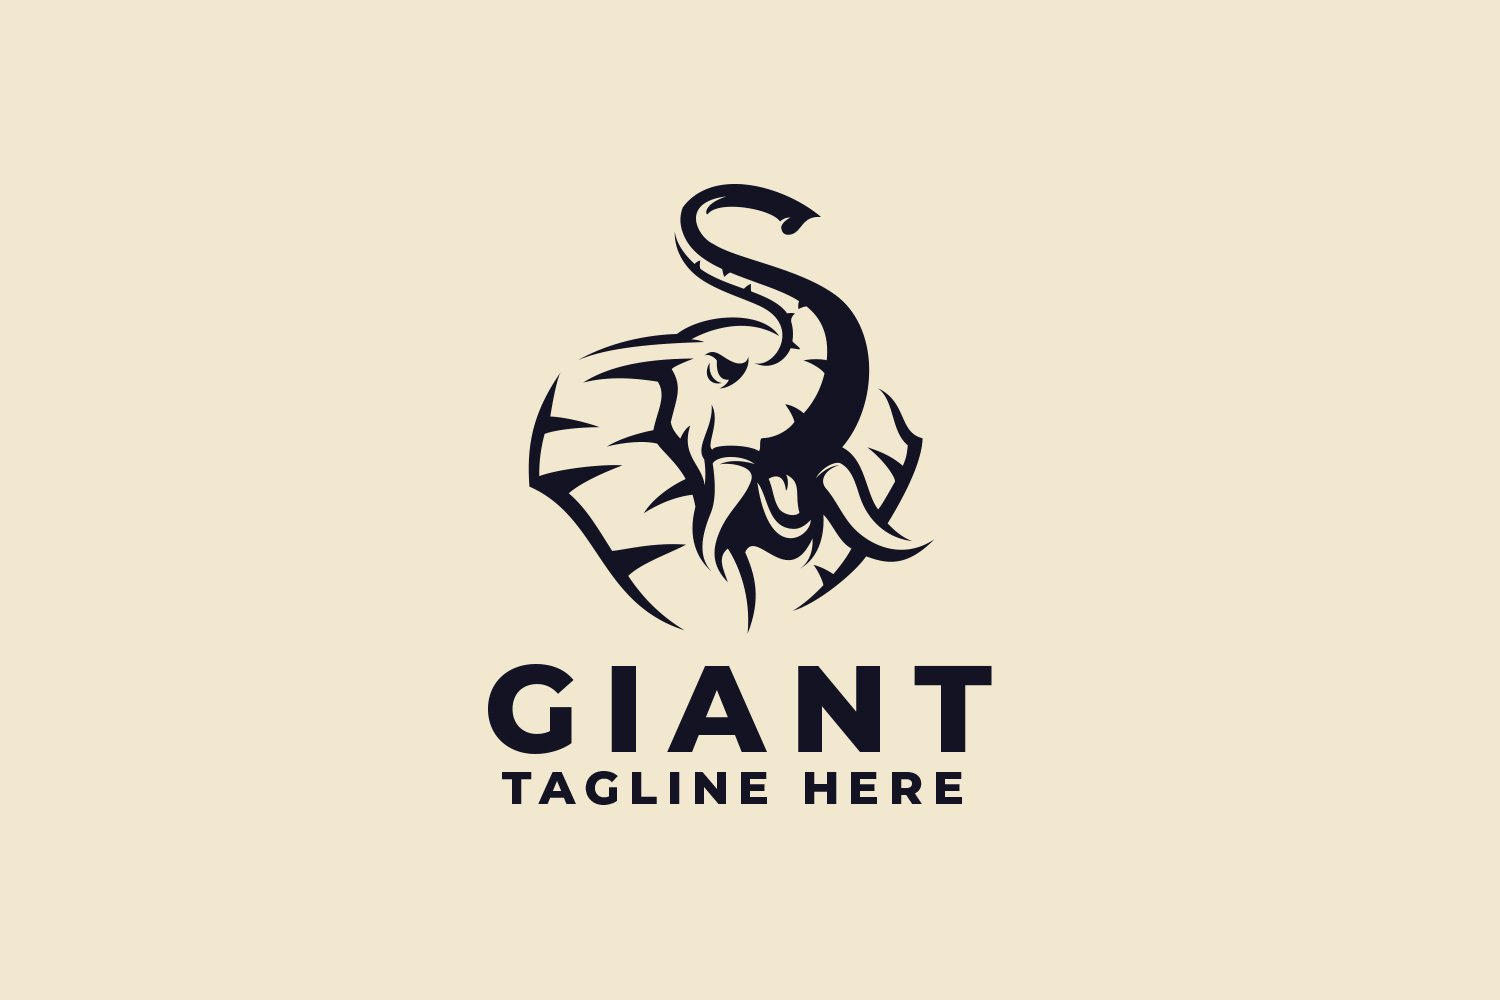 Angry Elephant Logo Design cover image.